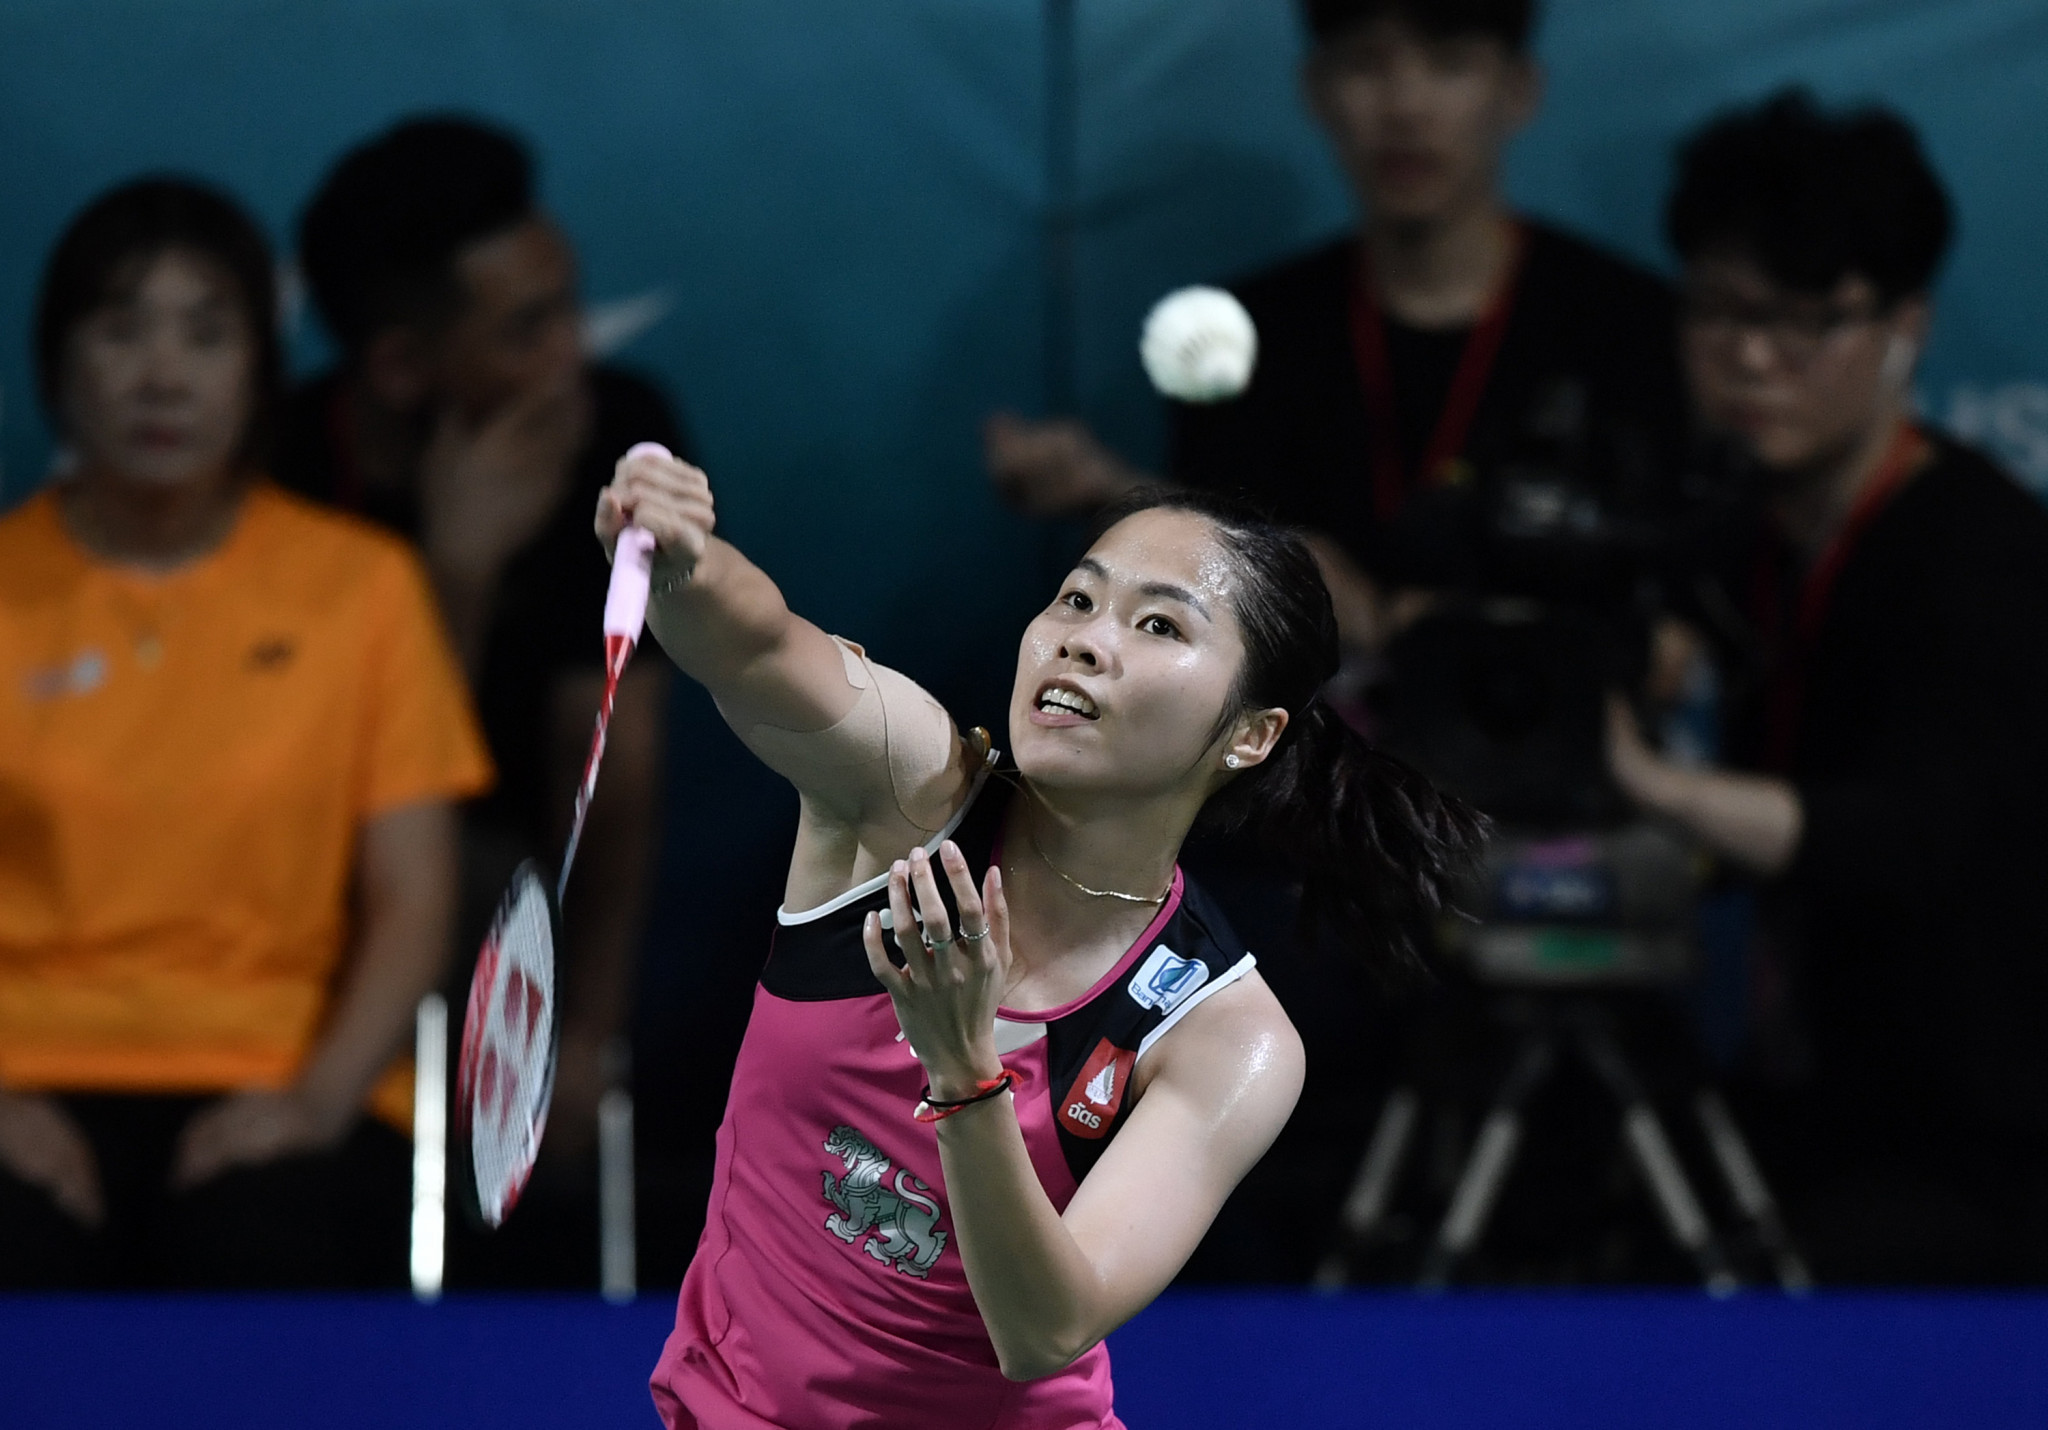 Ratchanok Intanon won the 2013 Women's World Badminton Championships in Guangzhou ©Getty Images